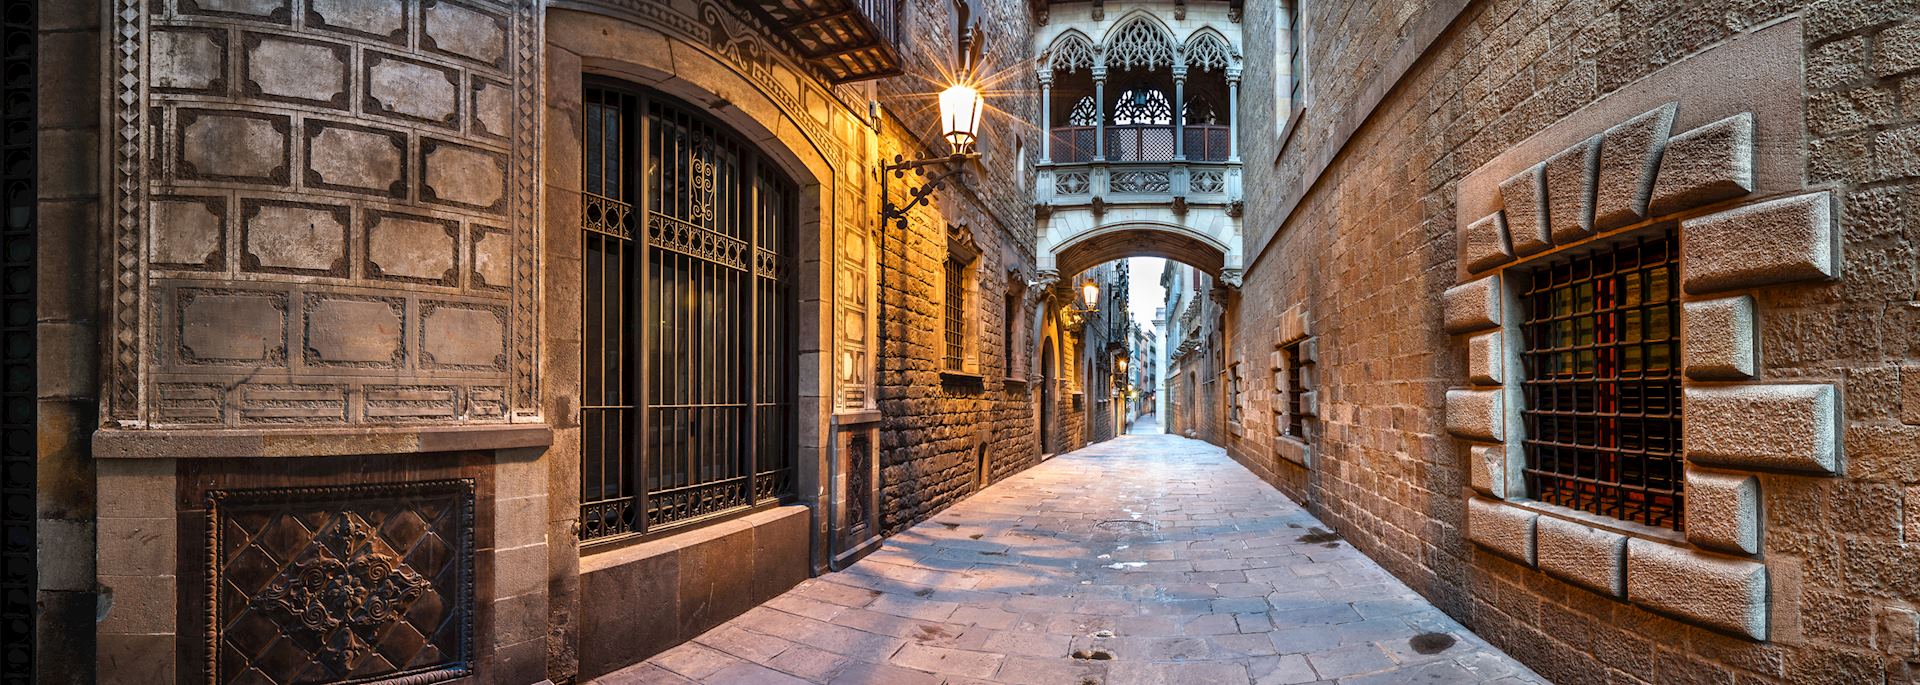 Buildings in Barcelona's Gothic Quarter